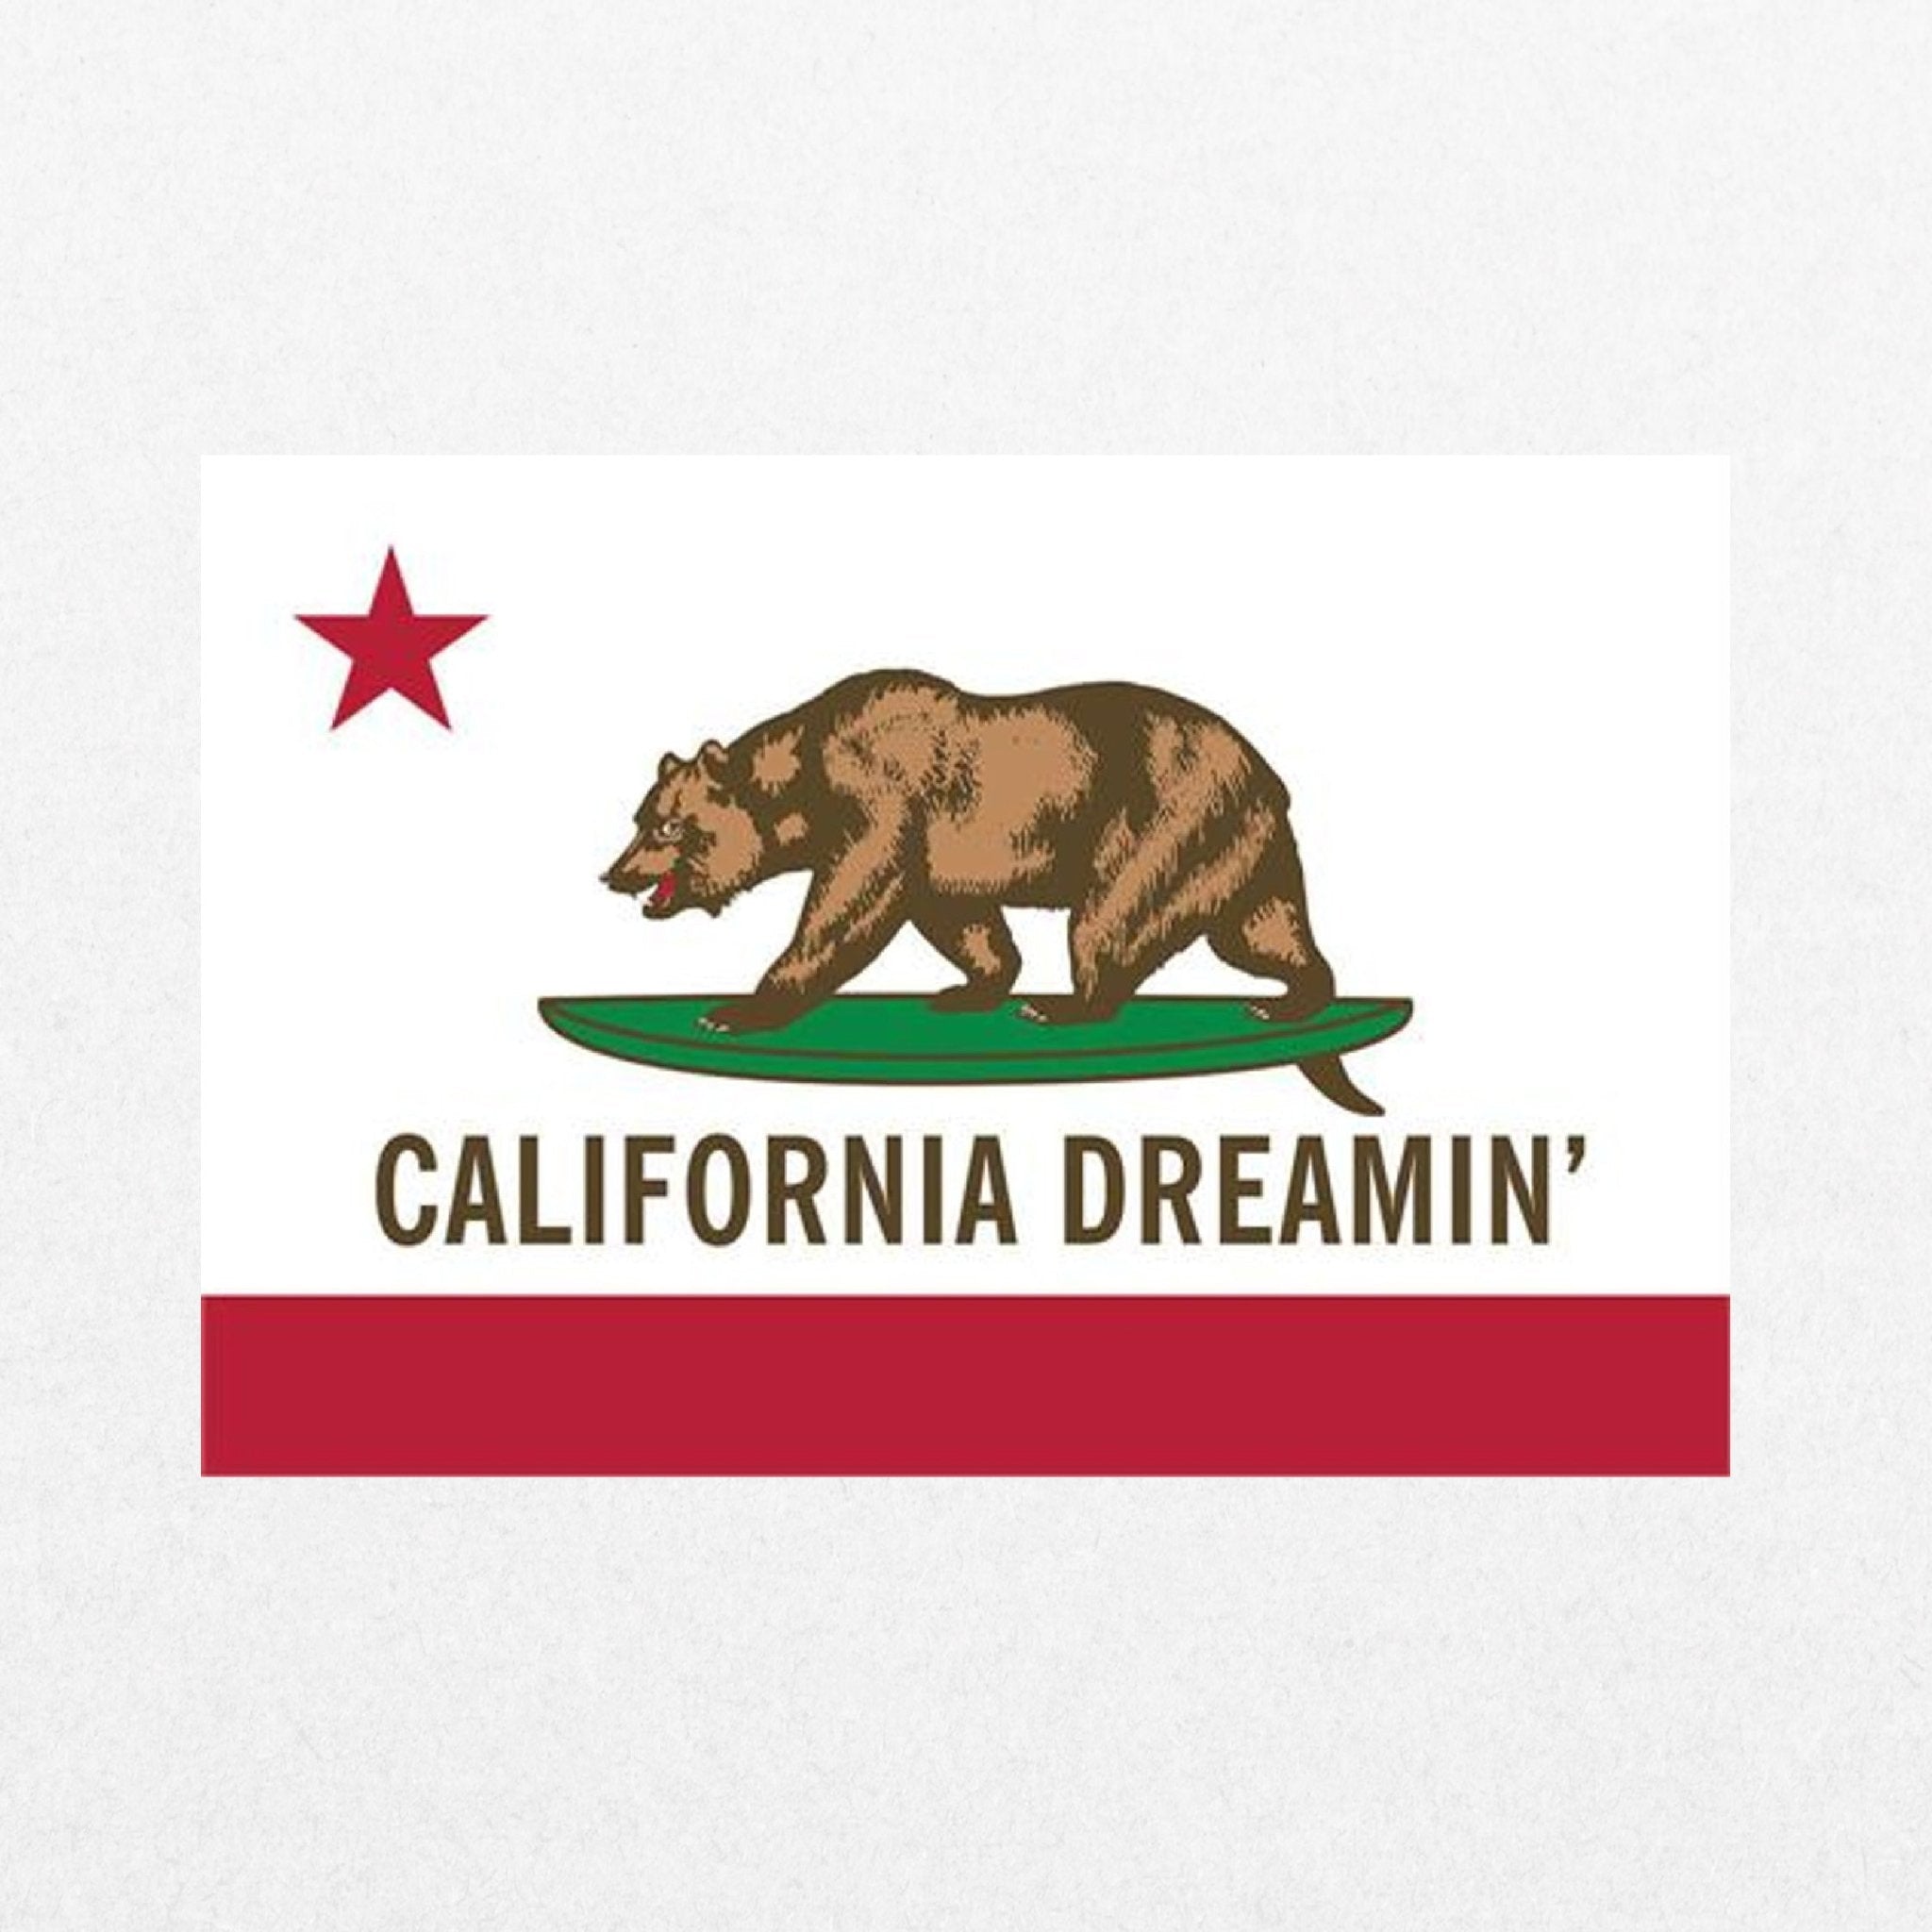 California Dreamin' - El Cartel